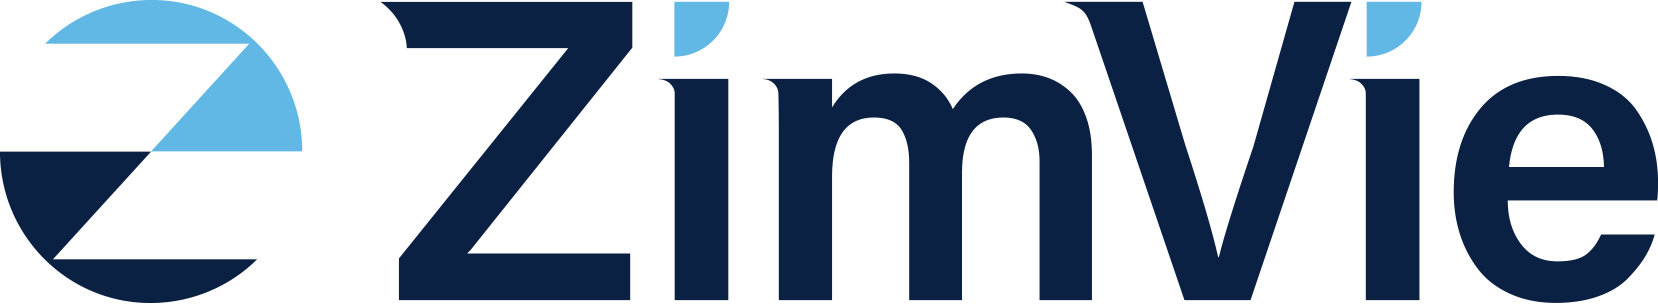 Zimvie Singapore Pte. Ltd. logo